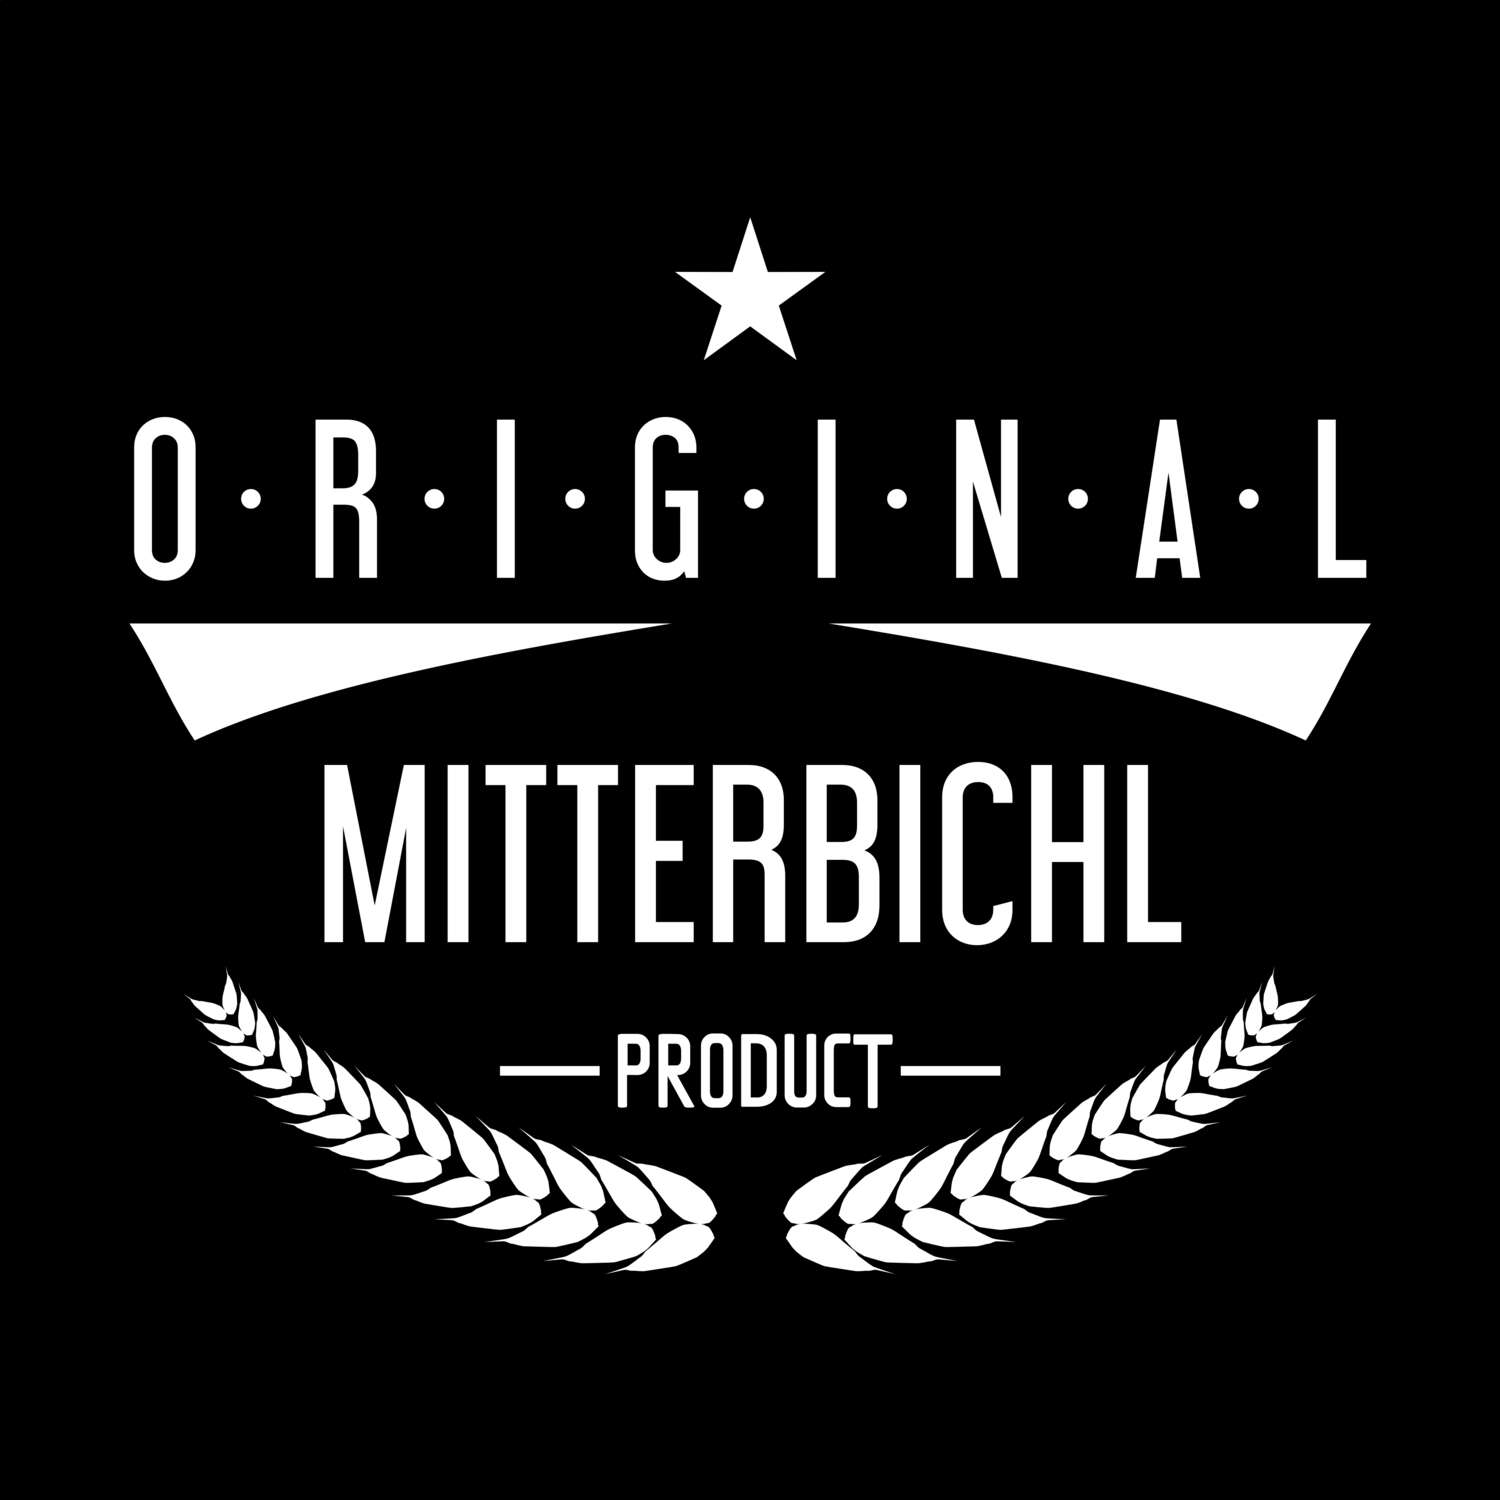 Mitterbichl T-Shirt »Original Product«